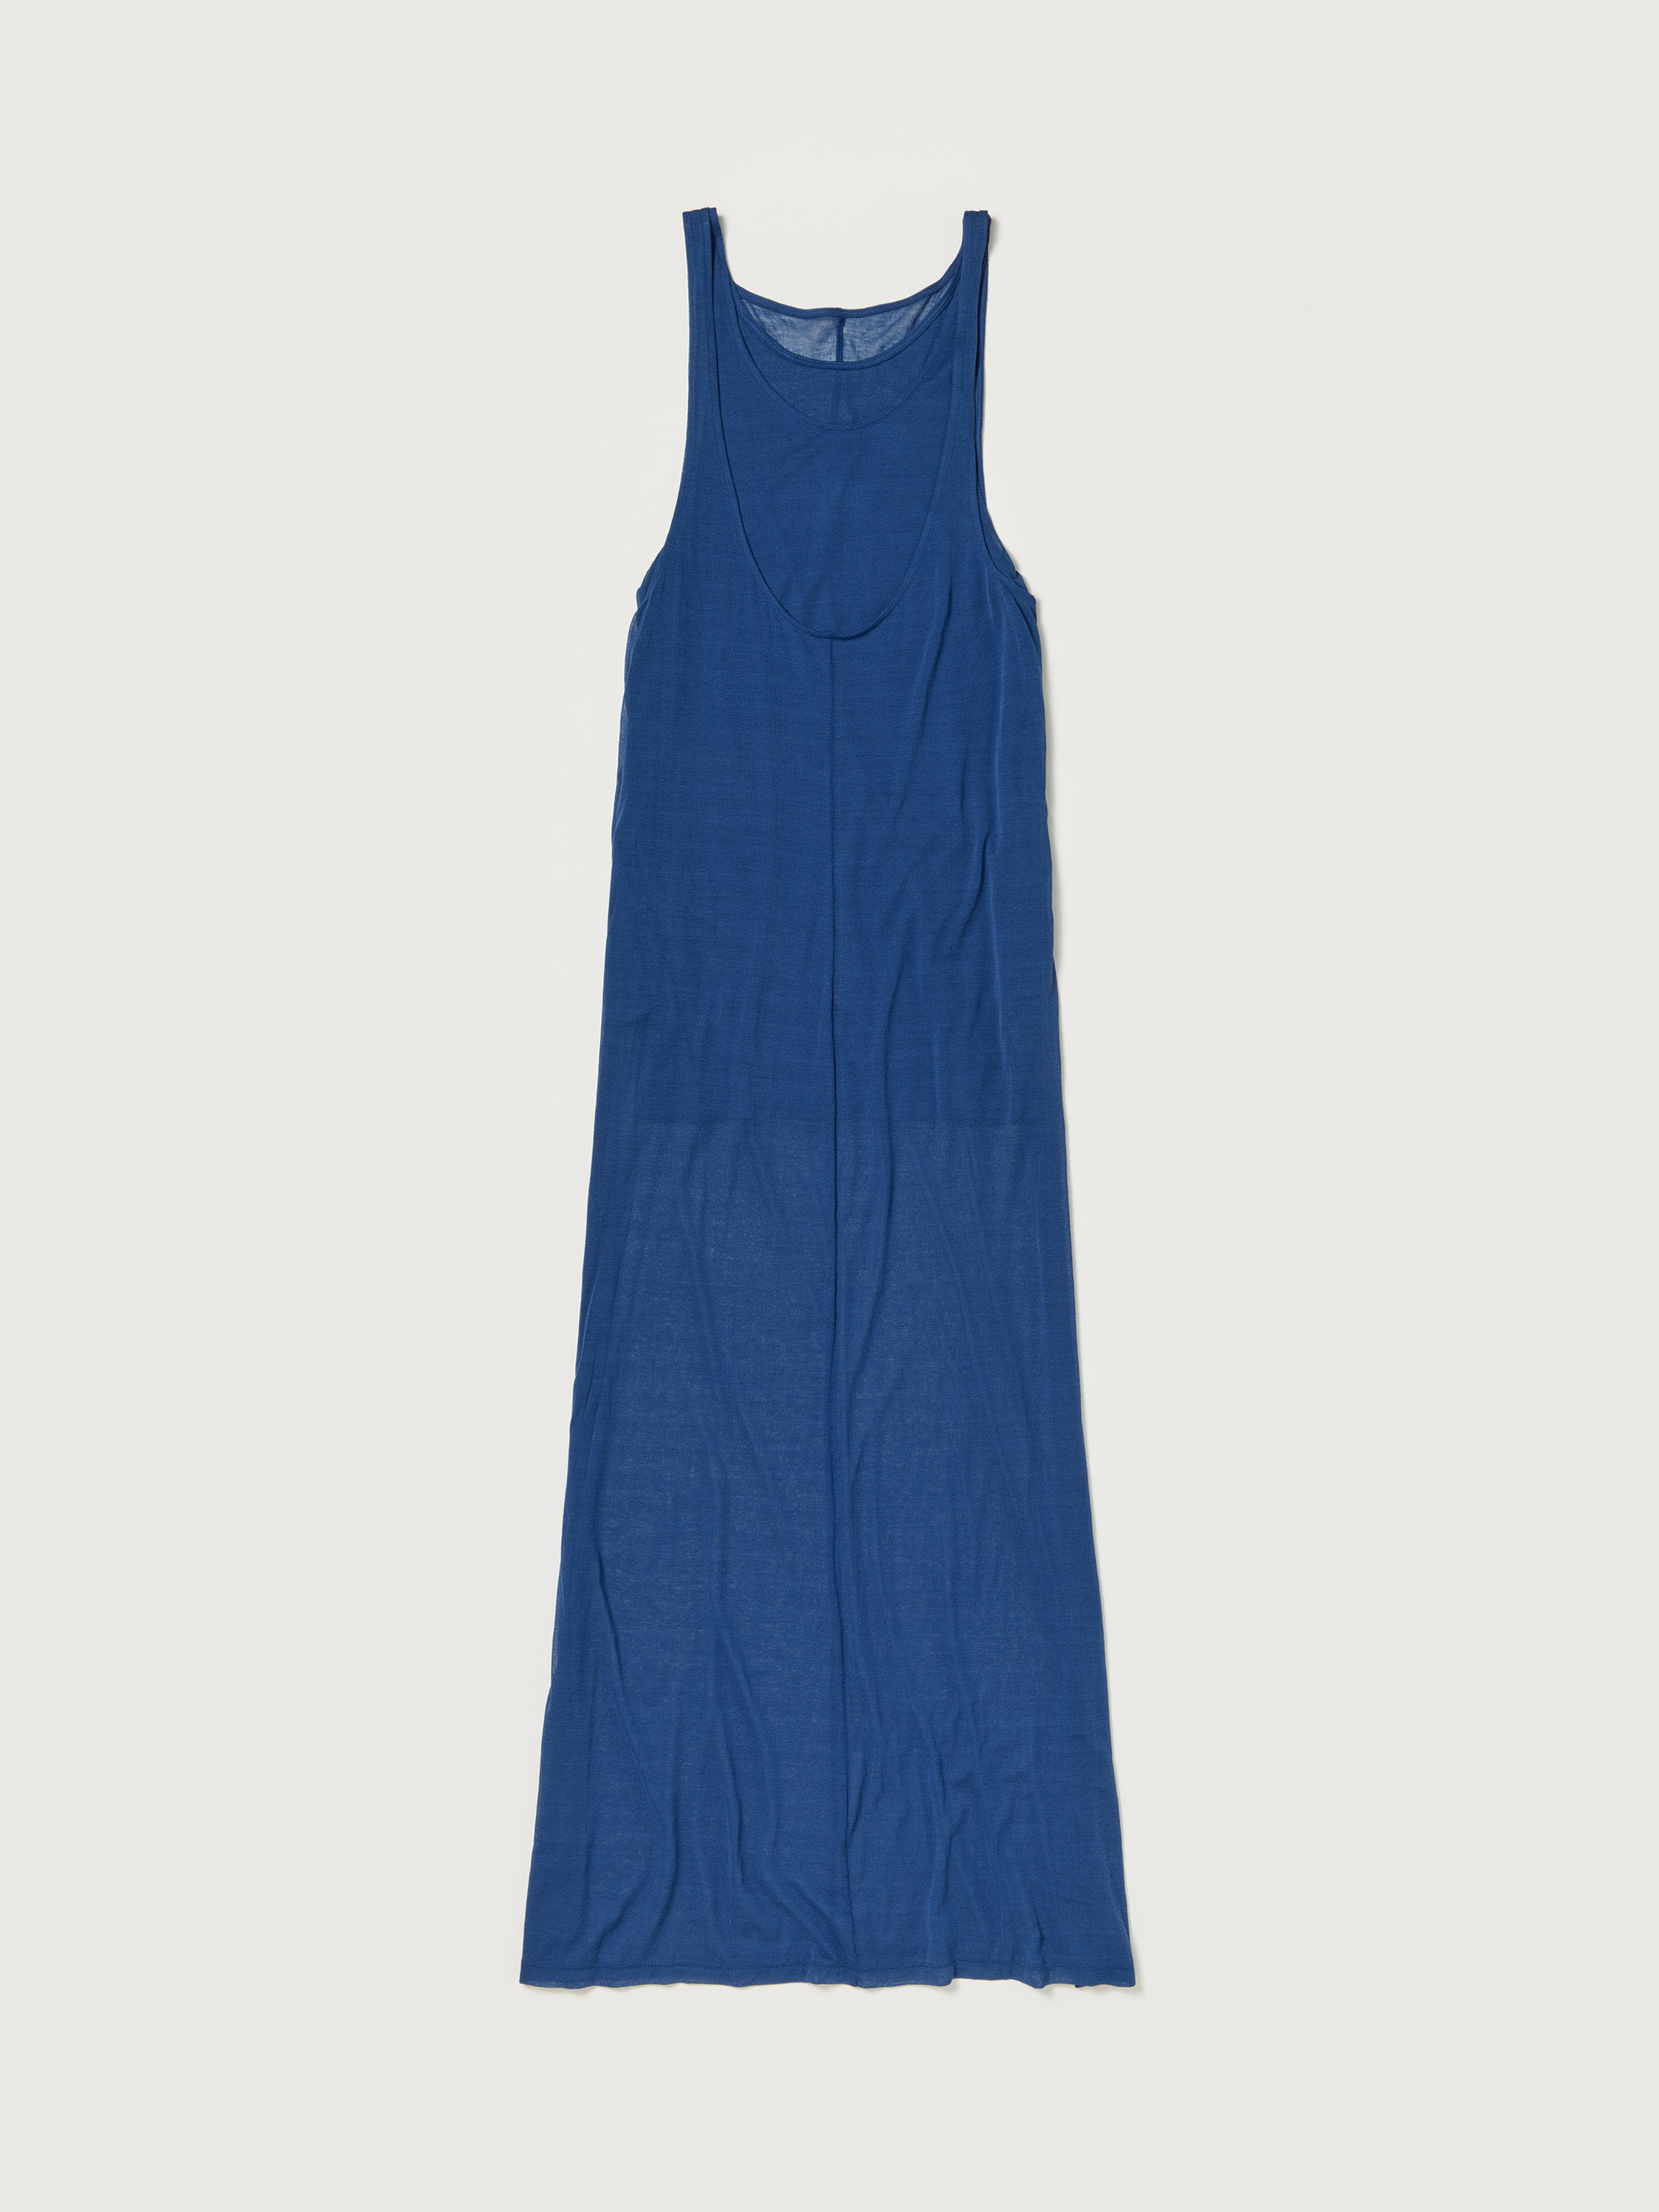 HARD TWIST COTTON GAUZE DRESS 詳細画像 BLUE 4